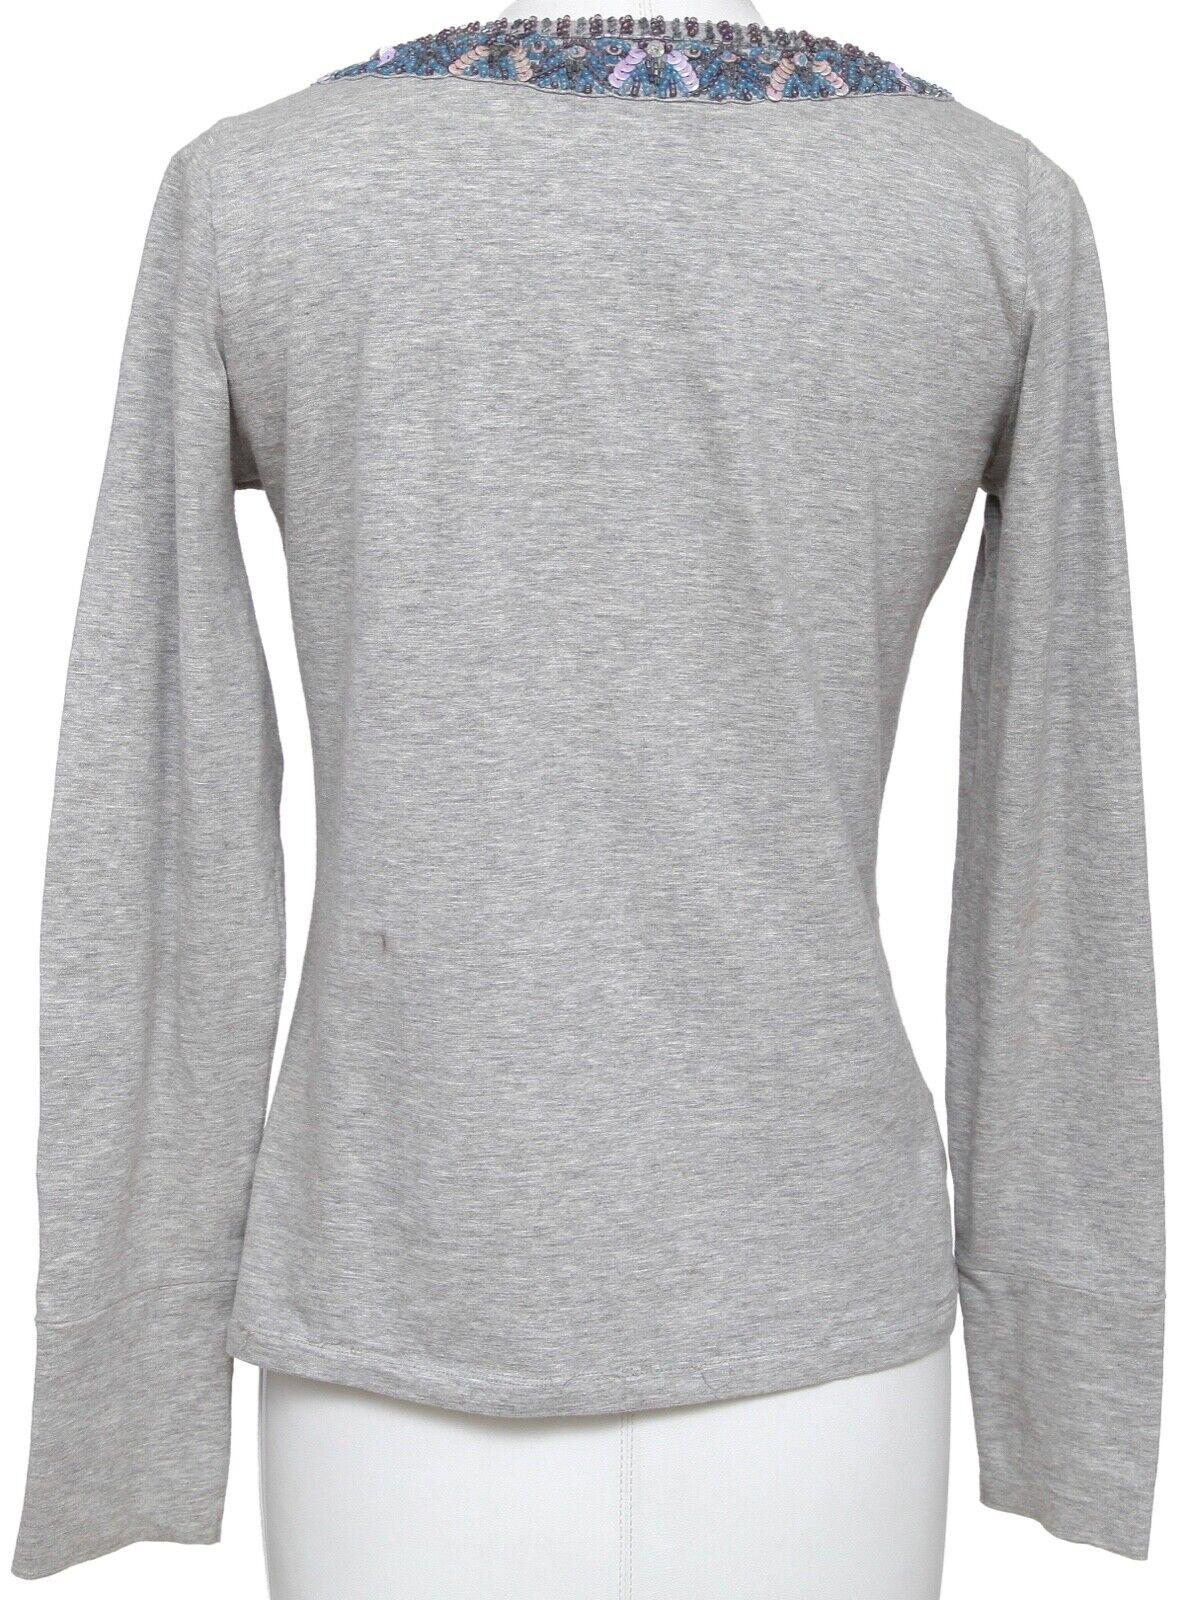 ETRO Top Shirt T-Shirt Grey Beads Sequin V-neck Long Sleeve Cotton Sz 42 For Sale 4